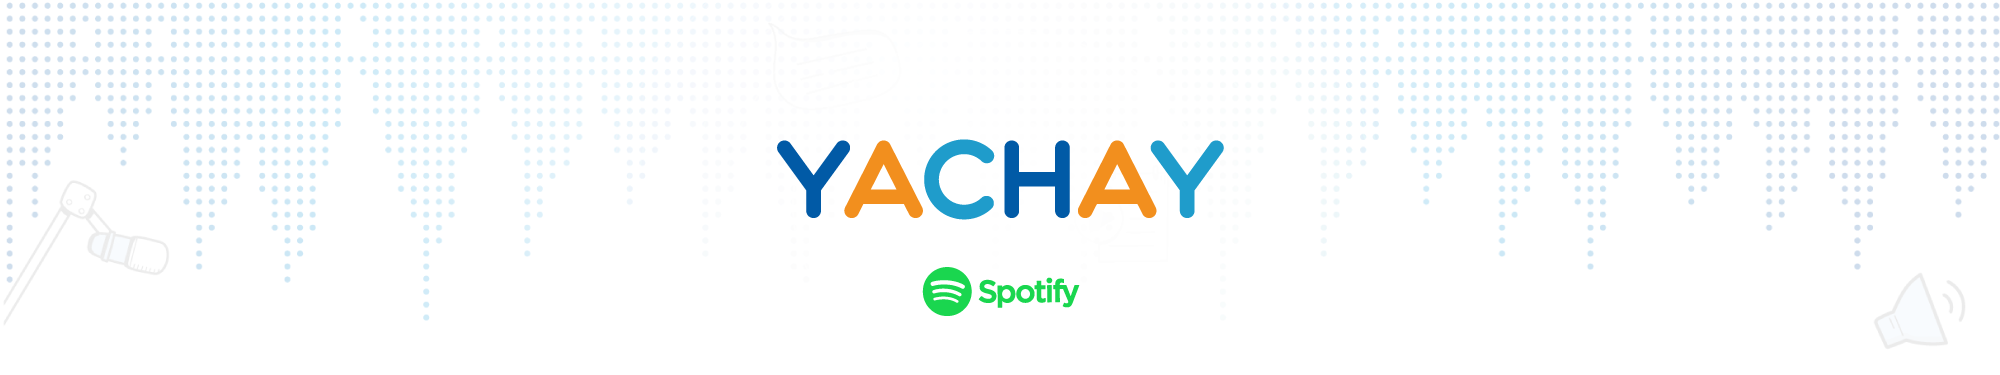 yachay banner web